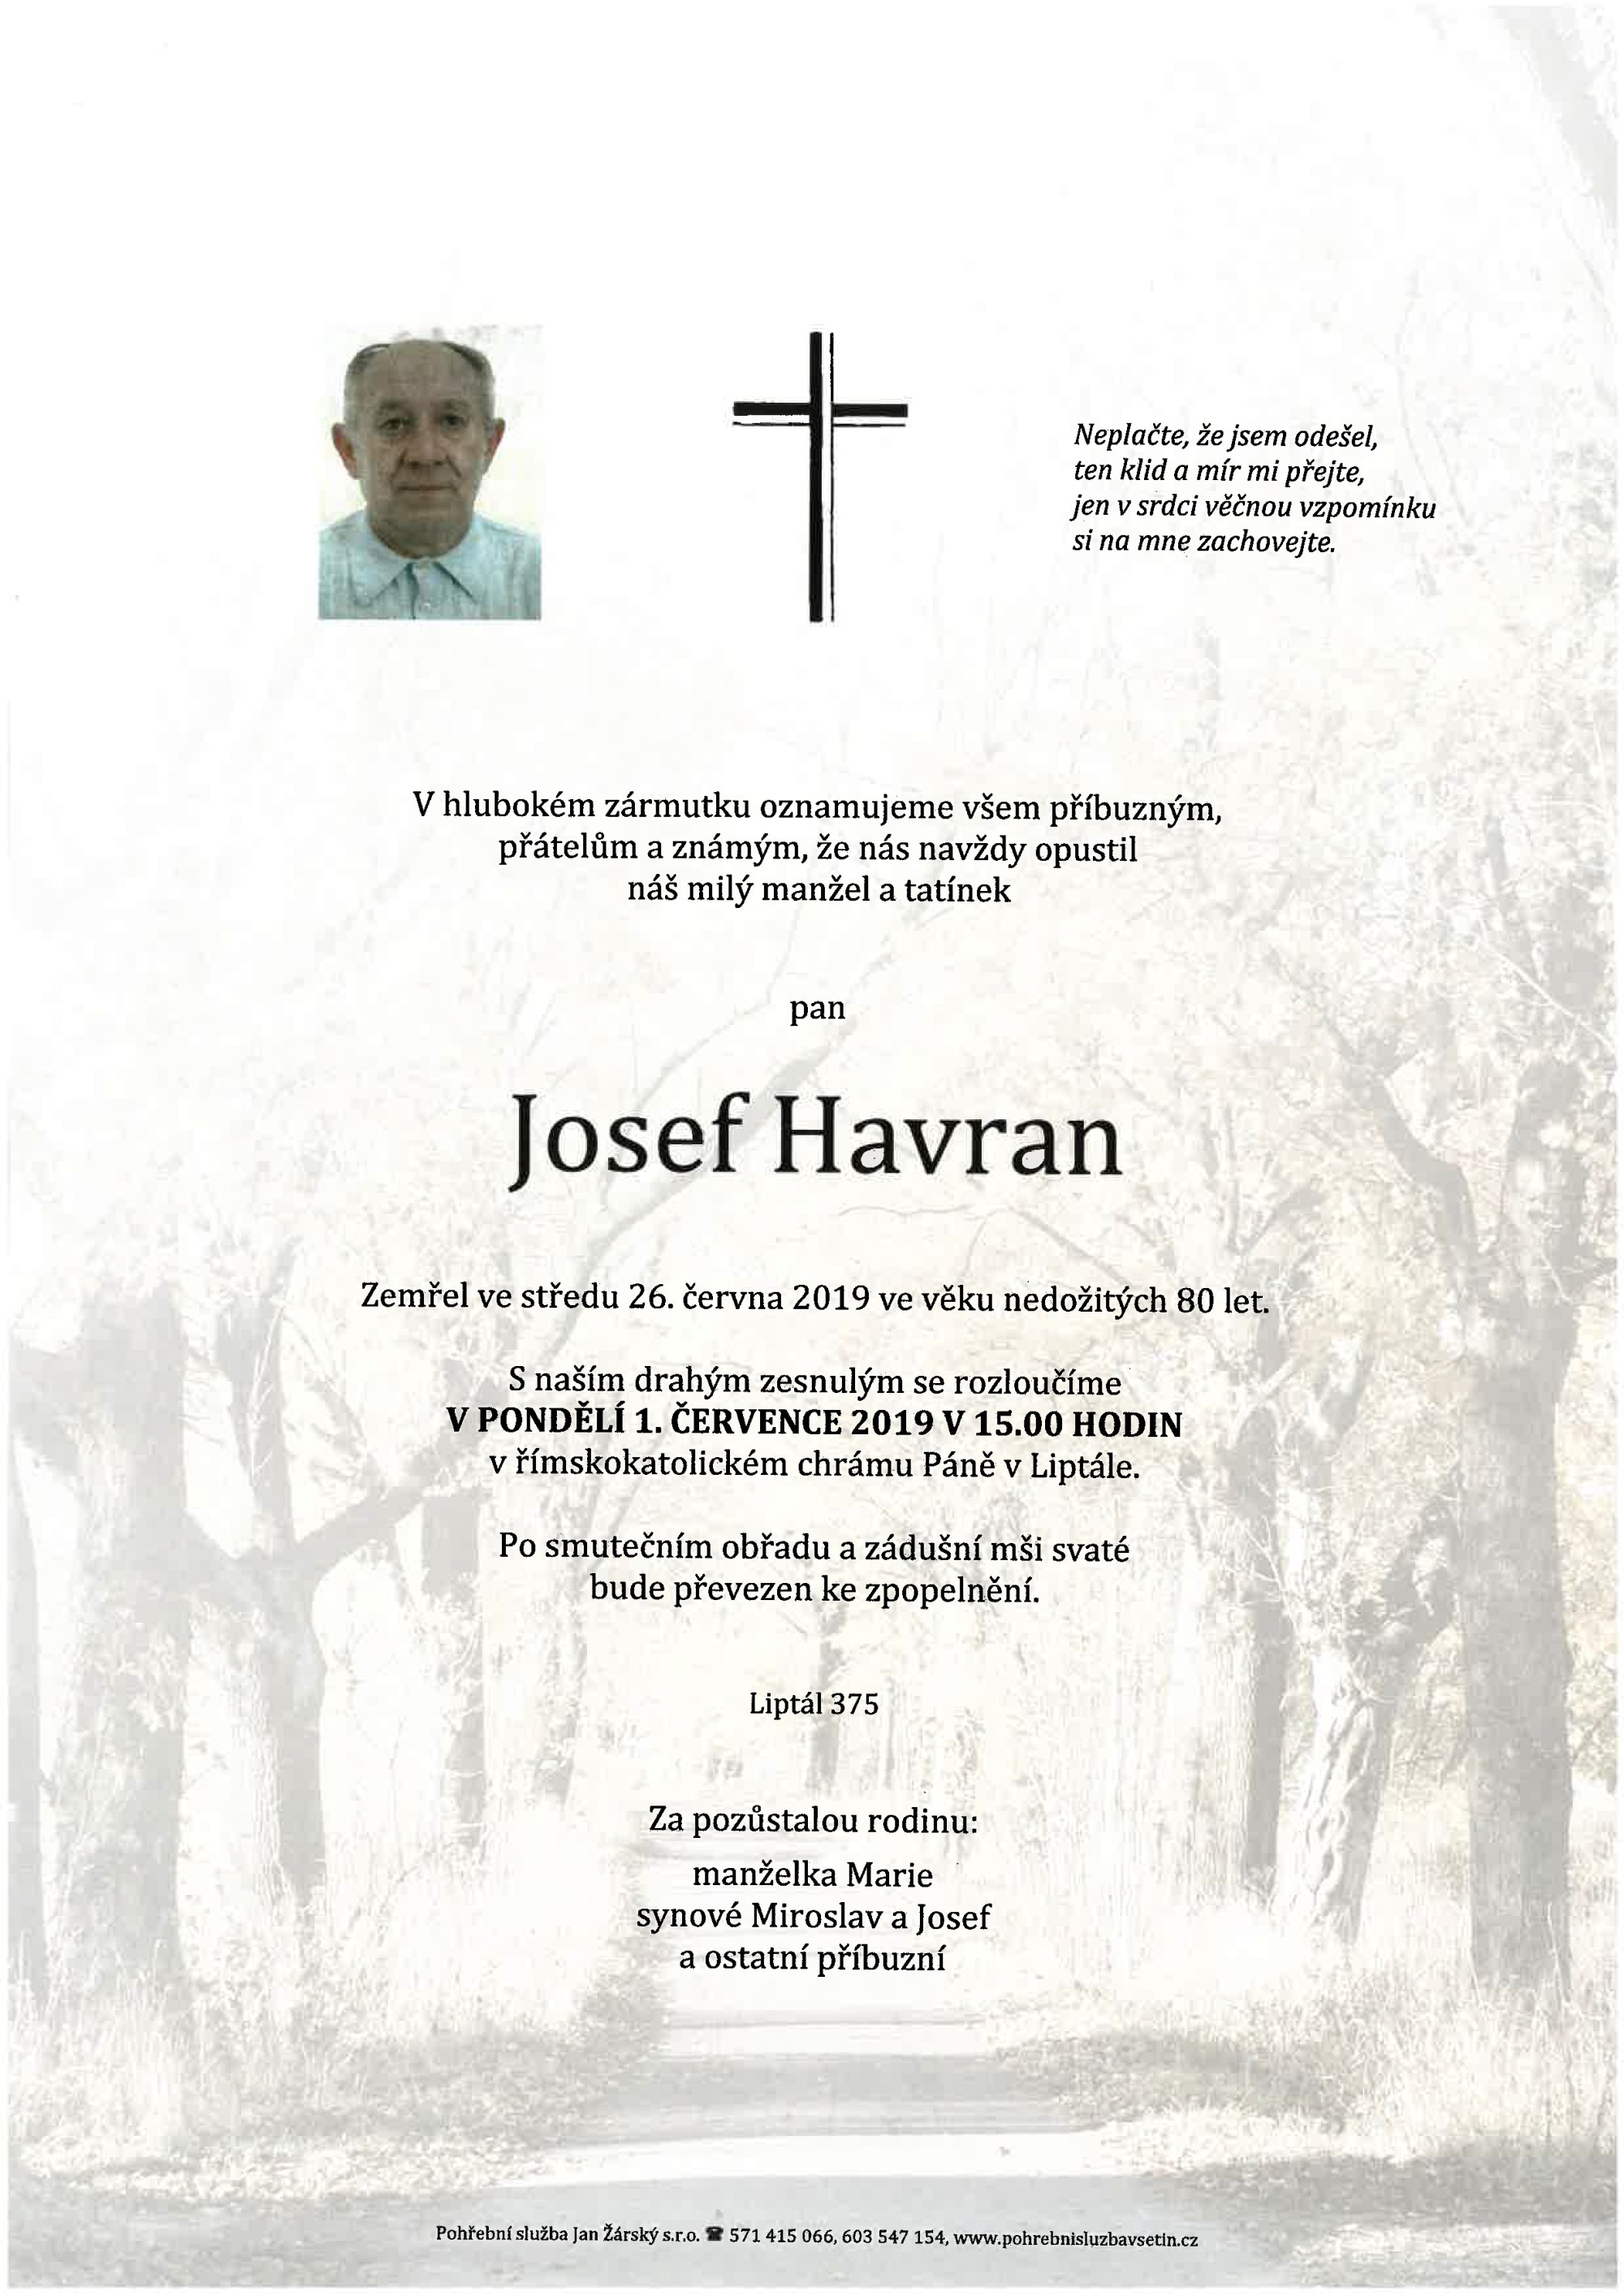 Josef Havran